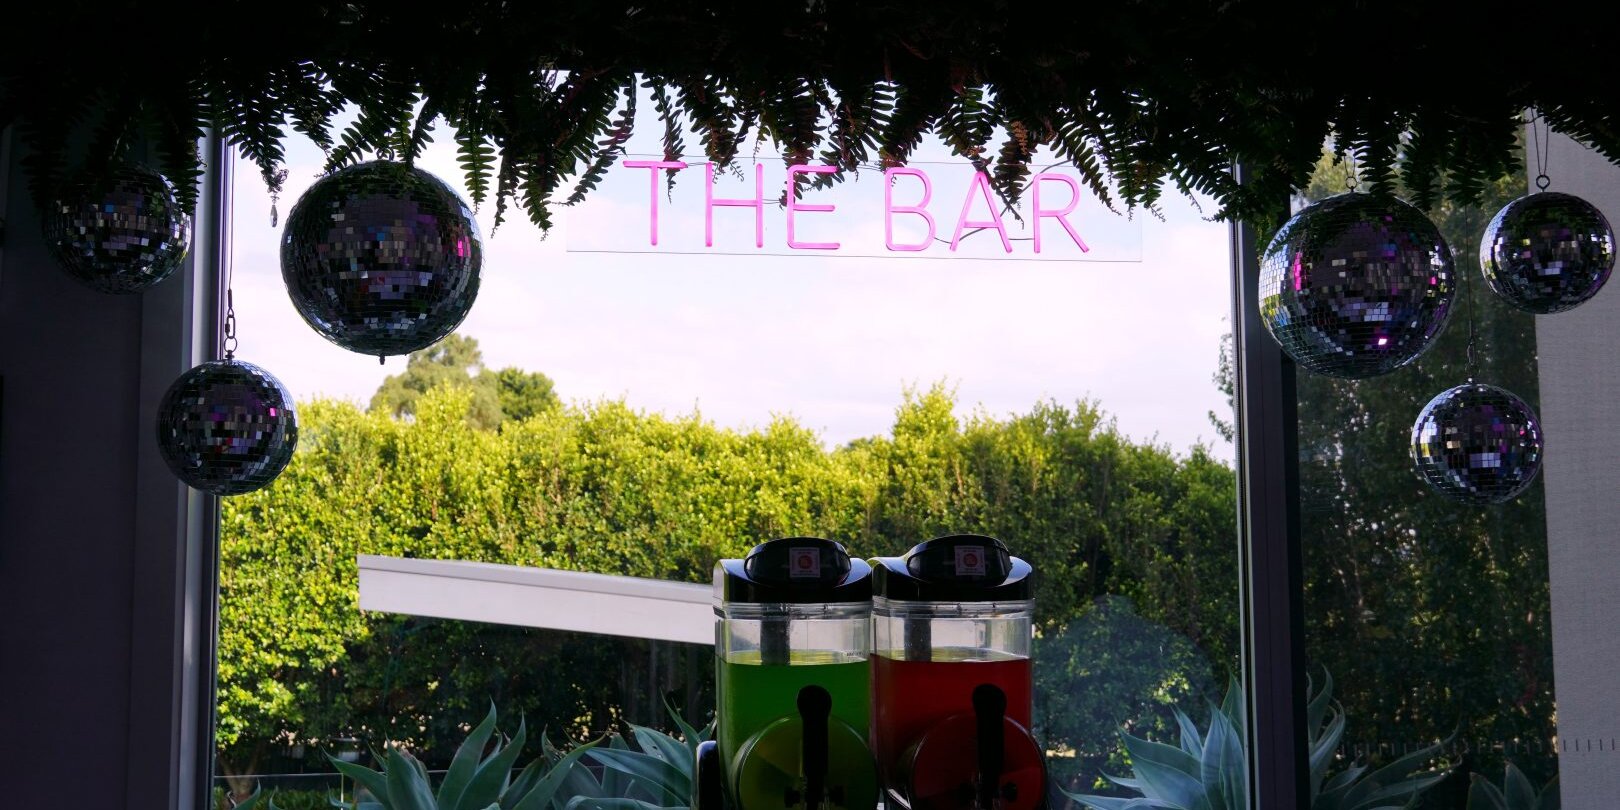 the bar neon sign, mirror balls, cocktail machine, greenery